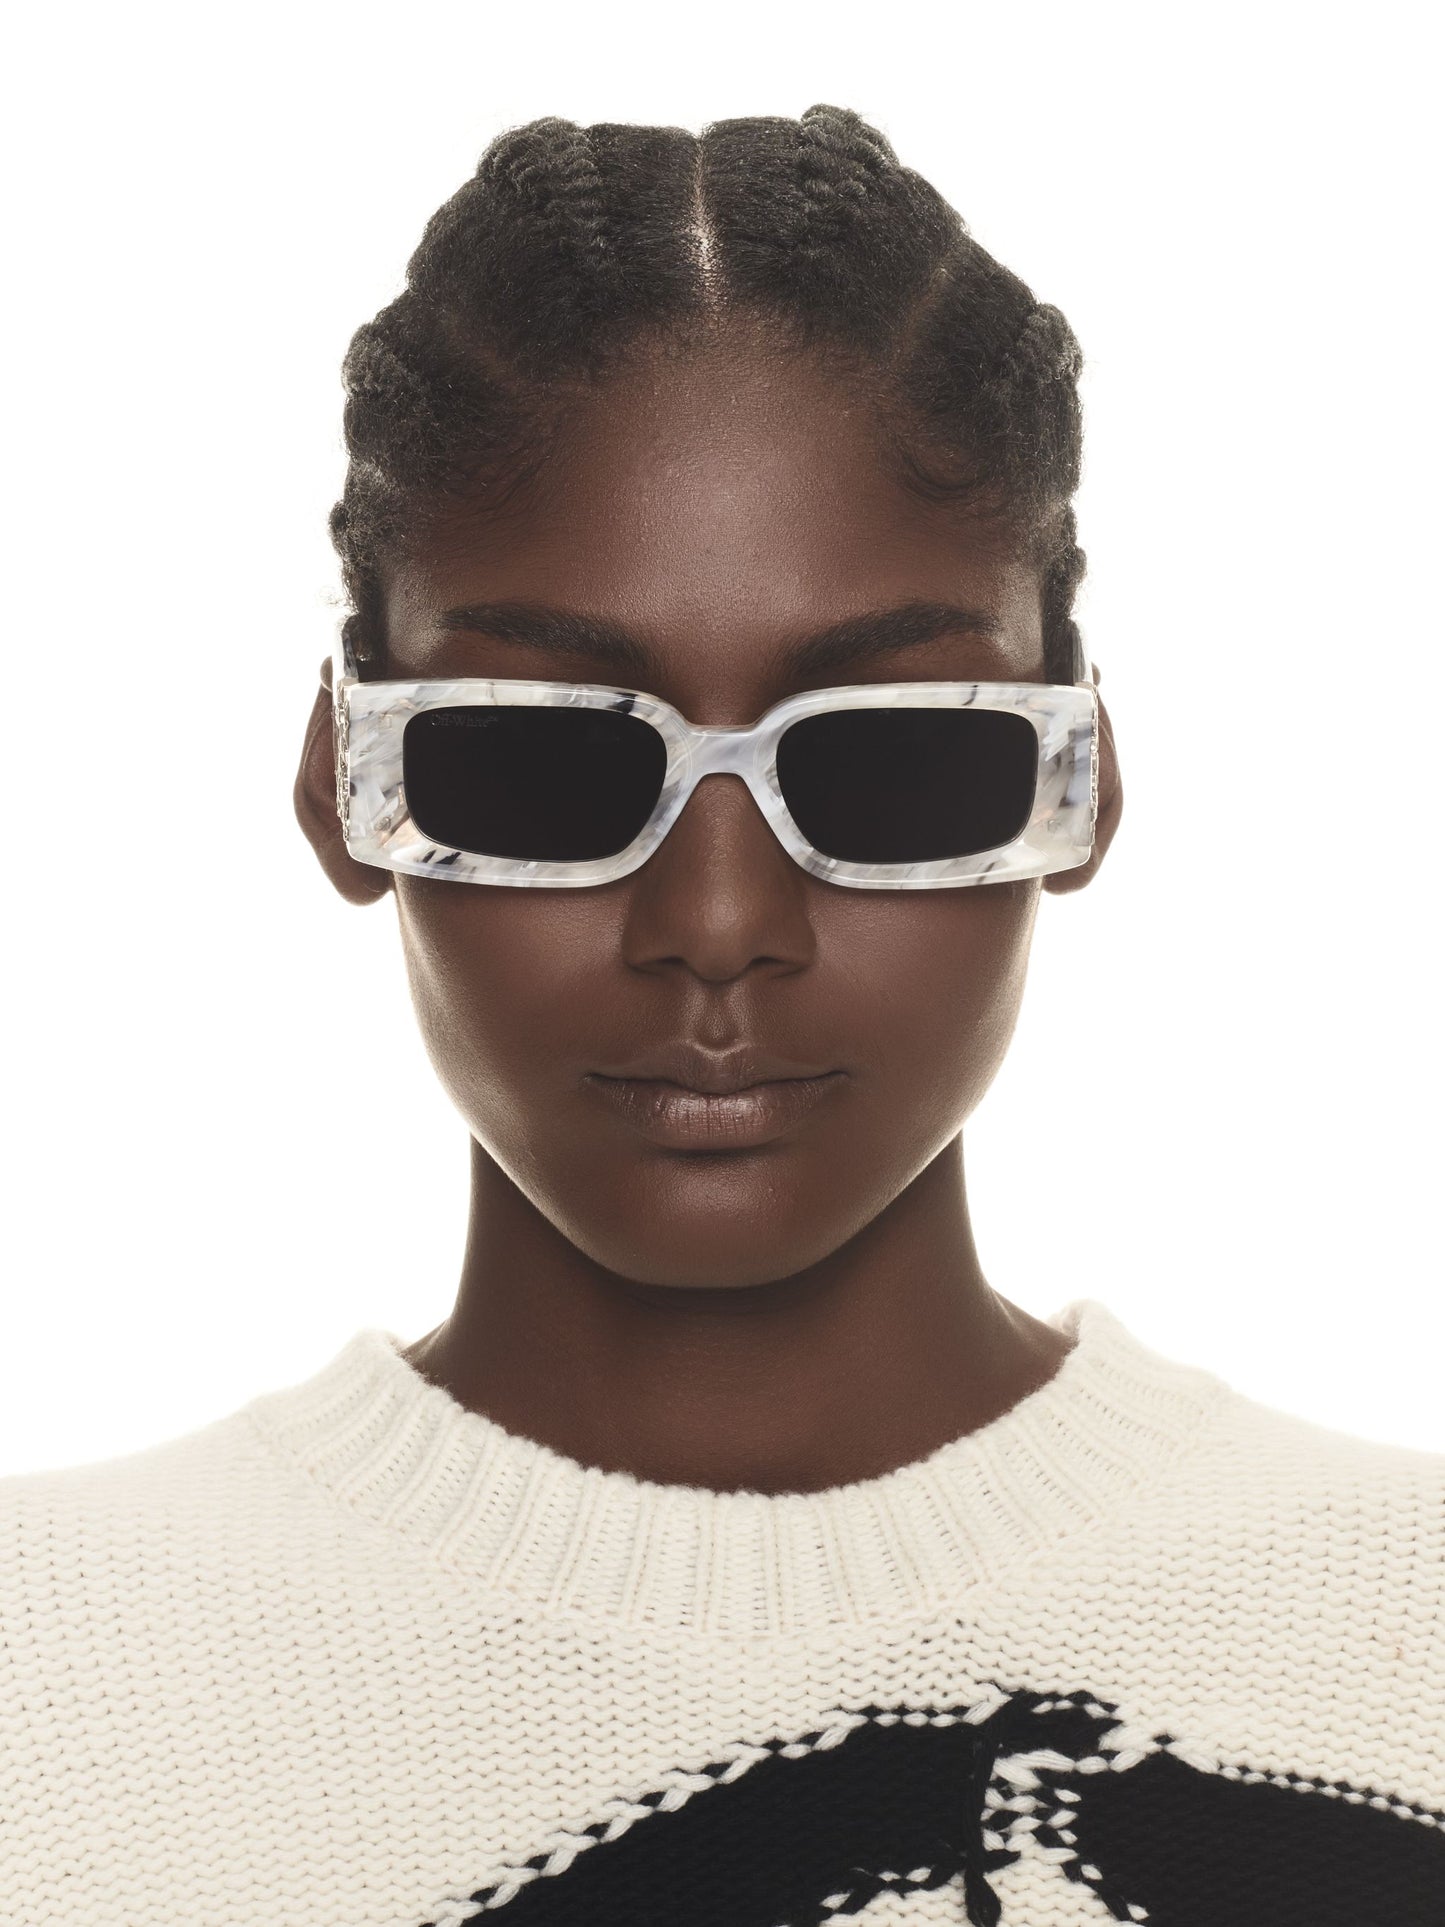 Off-White Roma Marble Dark Grey 52mm New Sunglasses